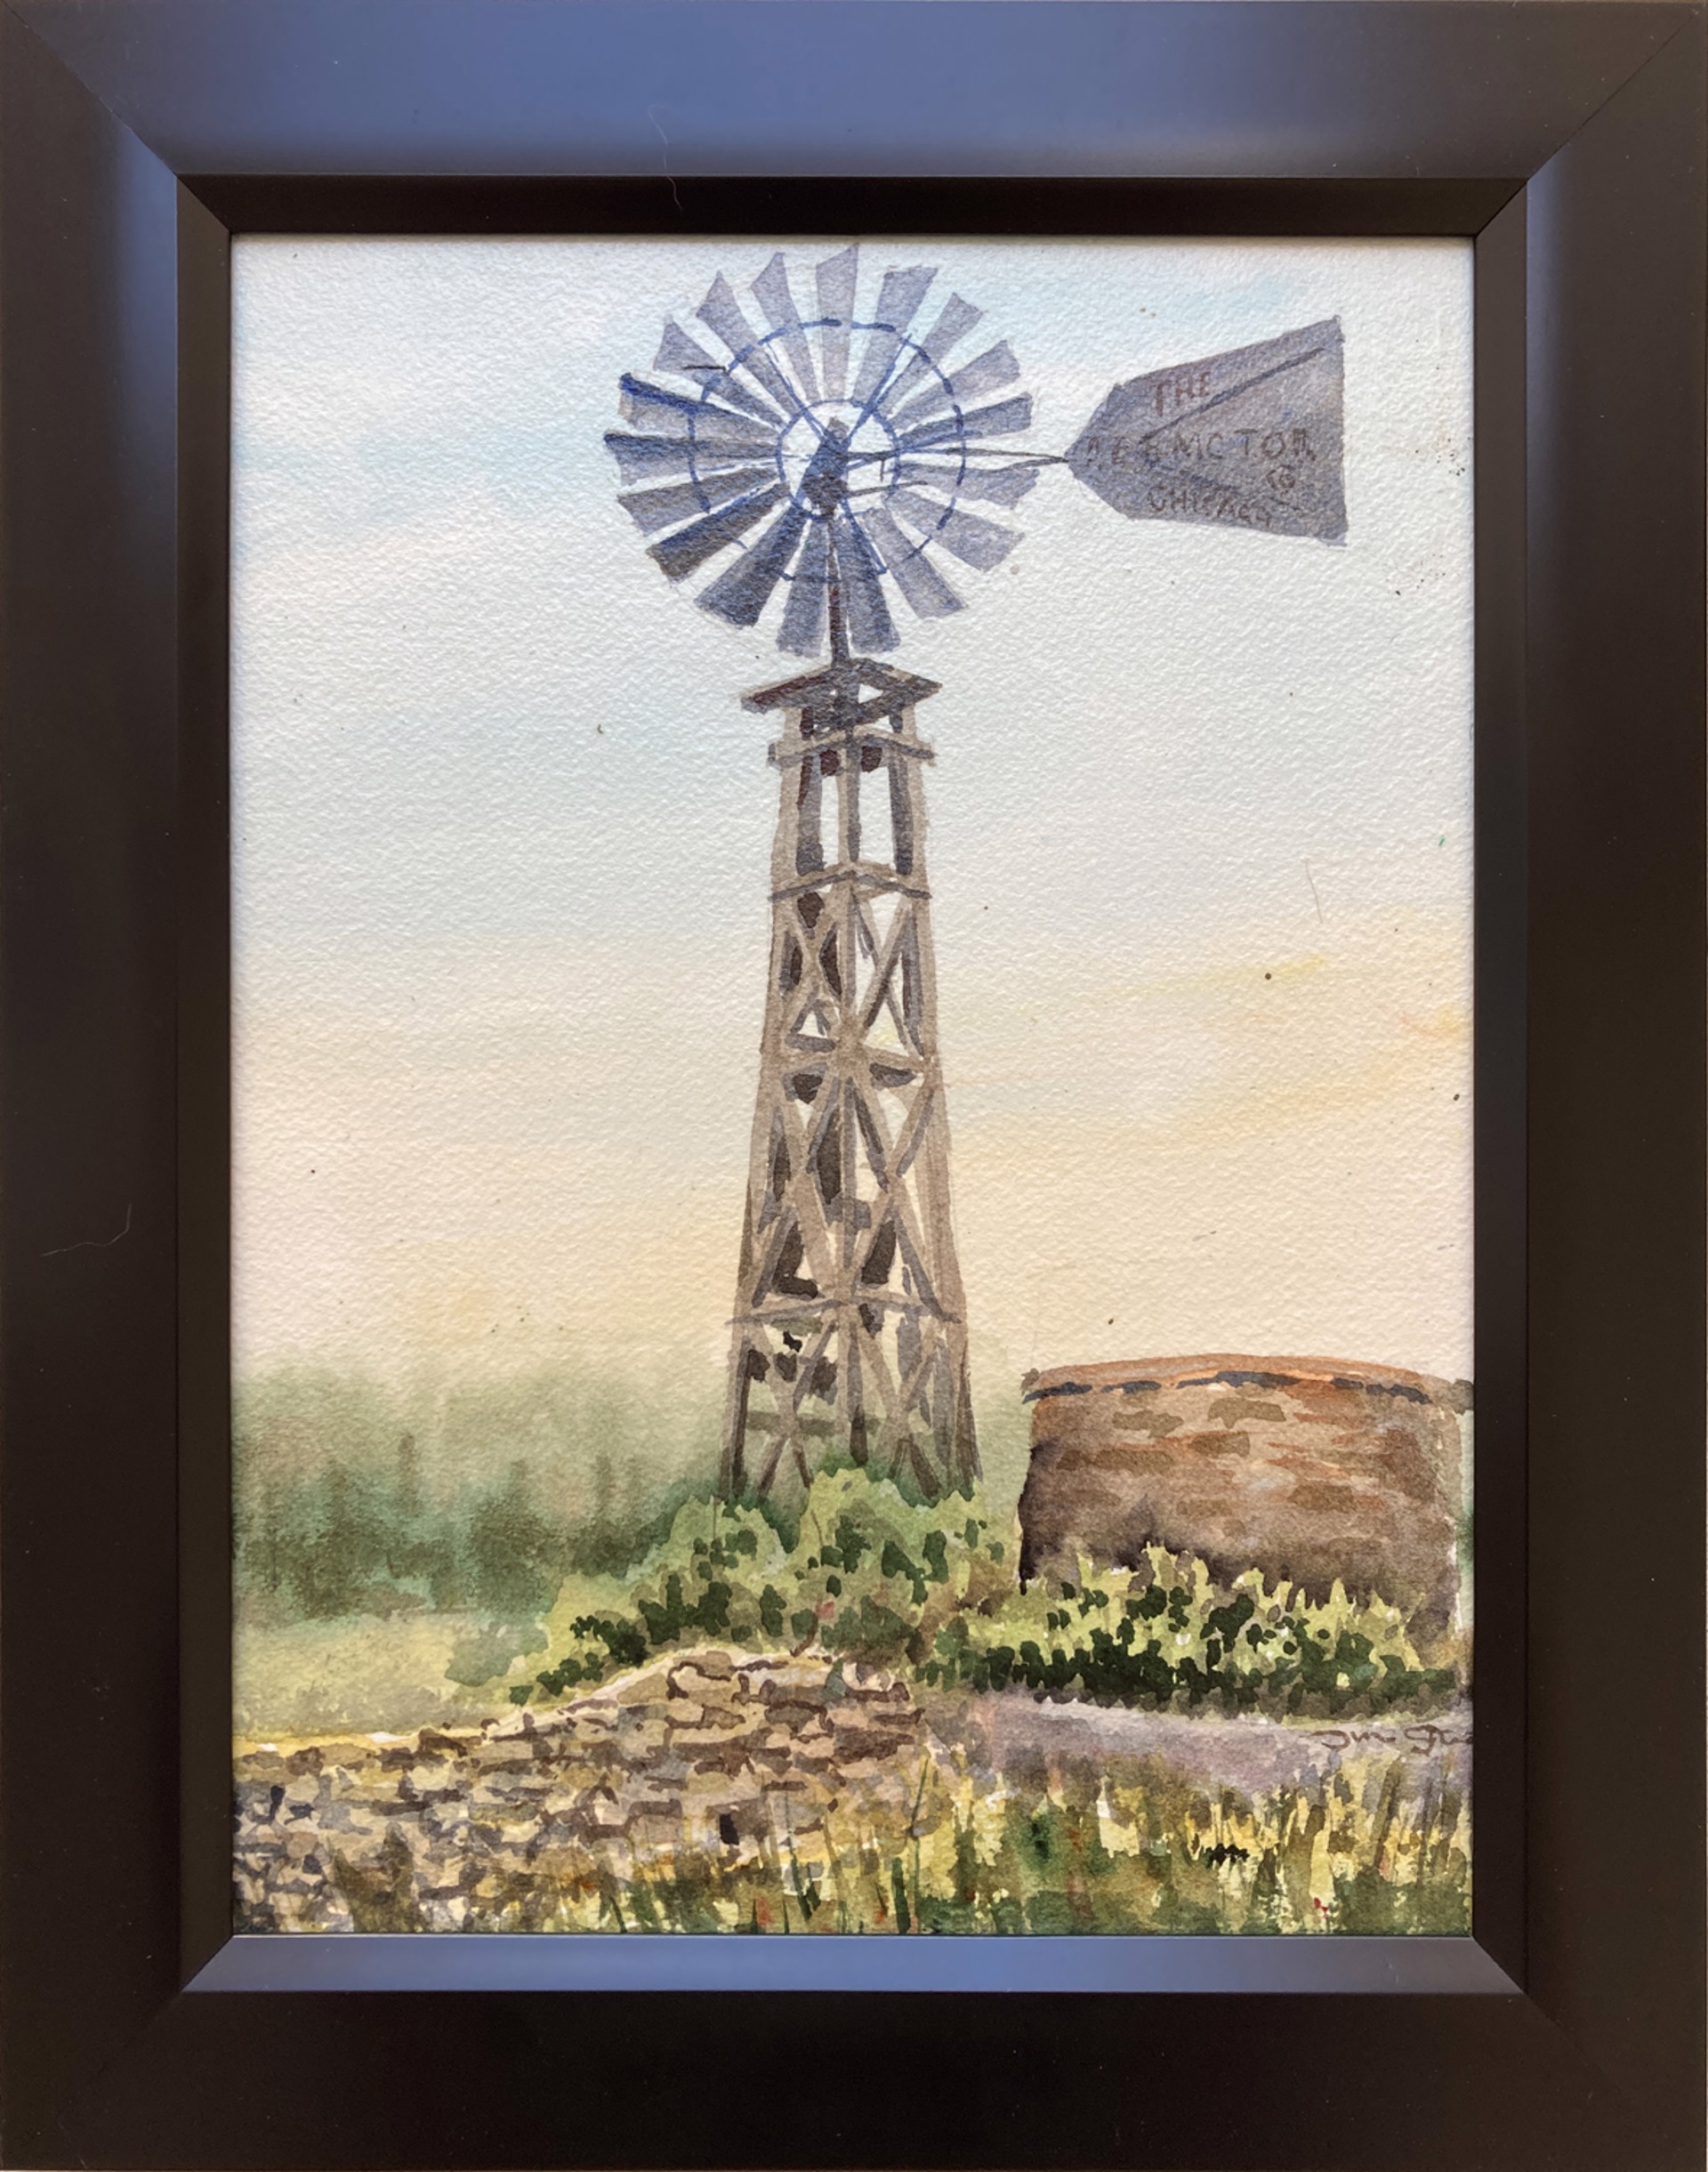 Pound Farm Windmill by Jim Street